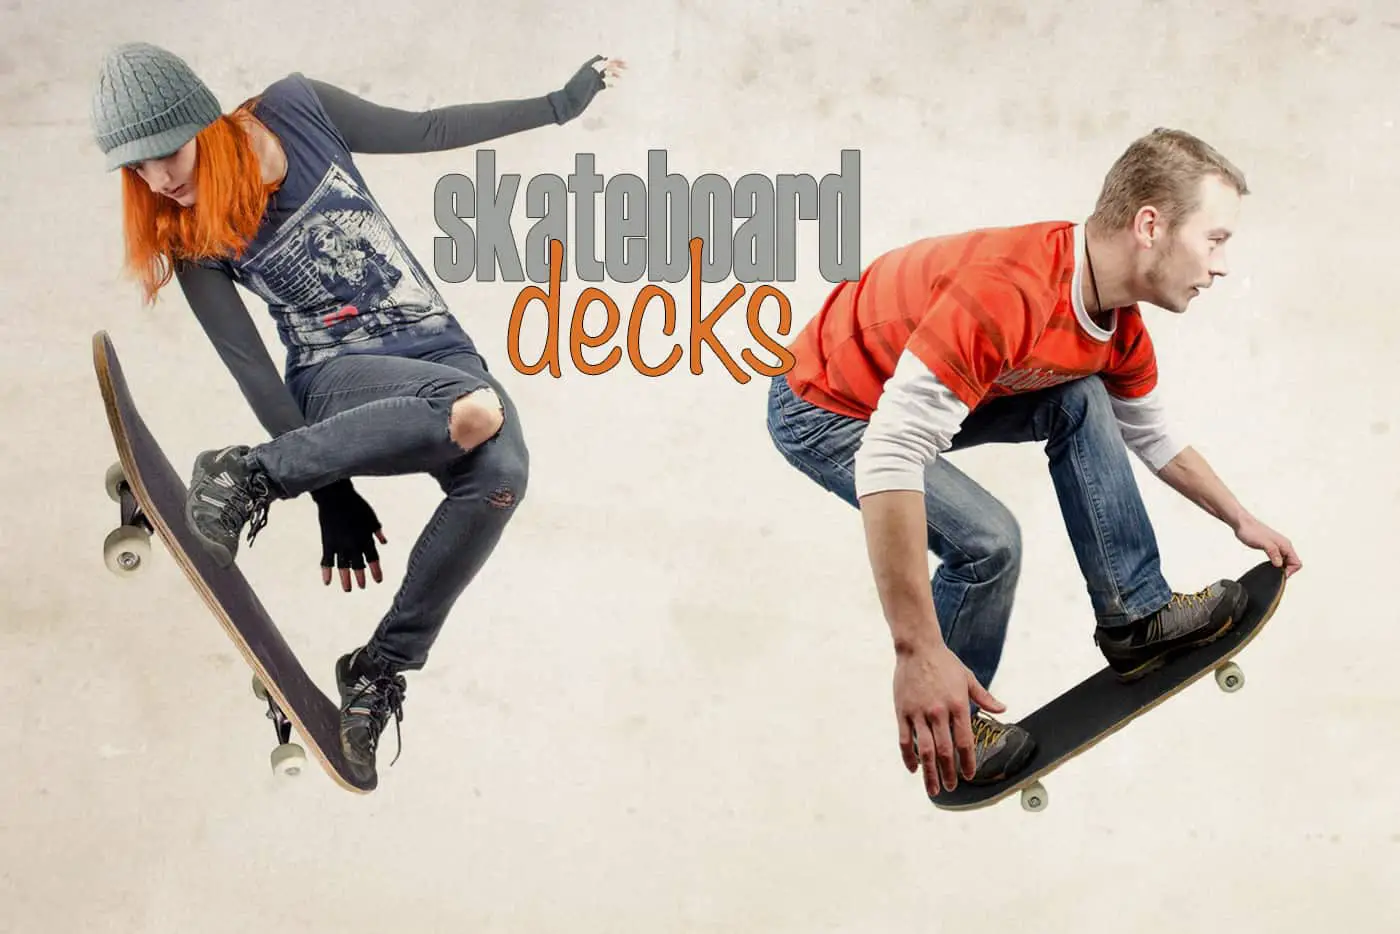 They skate well. Стрит скейтбординг фото. Скейтборд стайл. Skateboard brands. Марка скейтбординга Andrew.